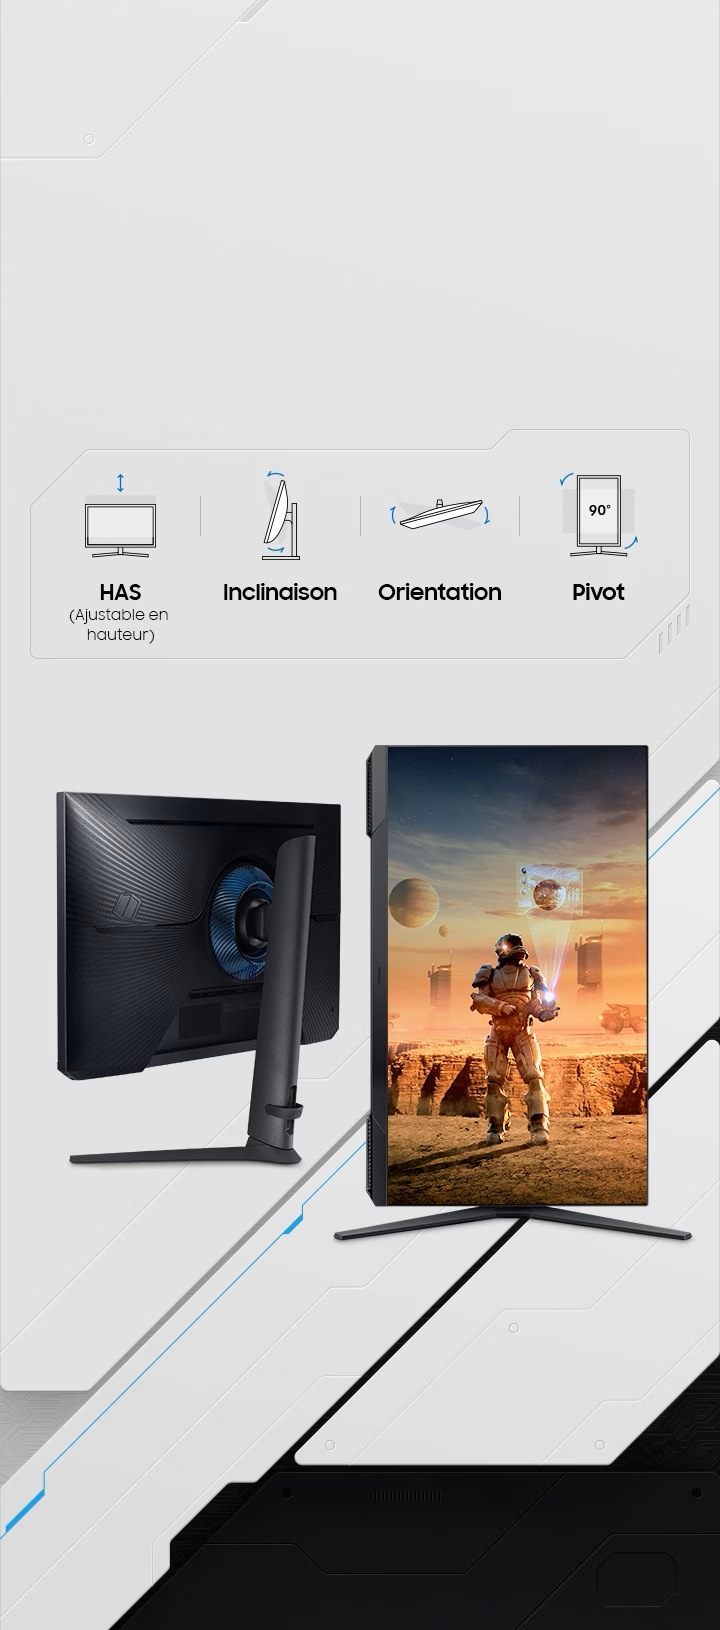 Promos Samsung Odyssey G3 : dépassez vos limites en jeu